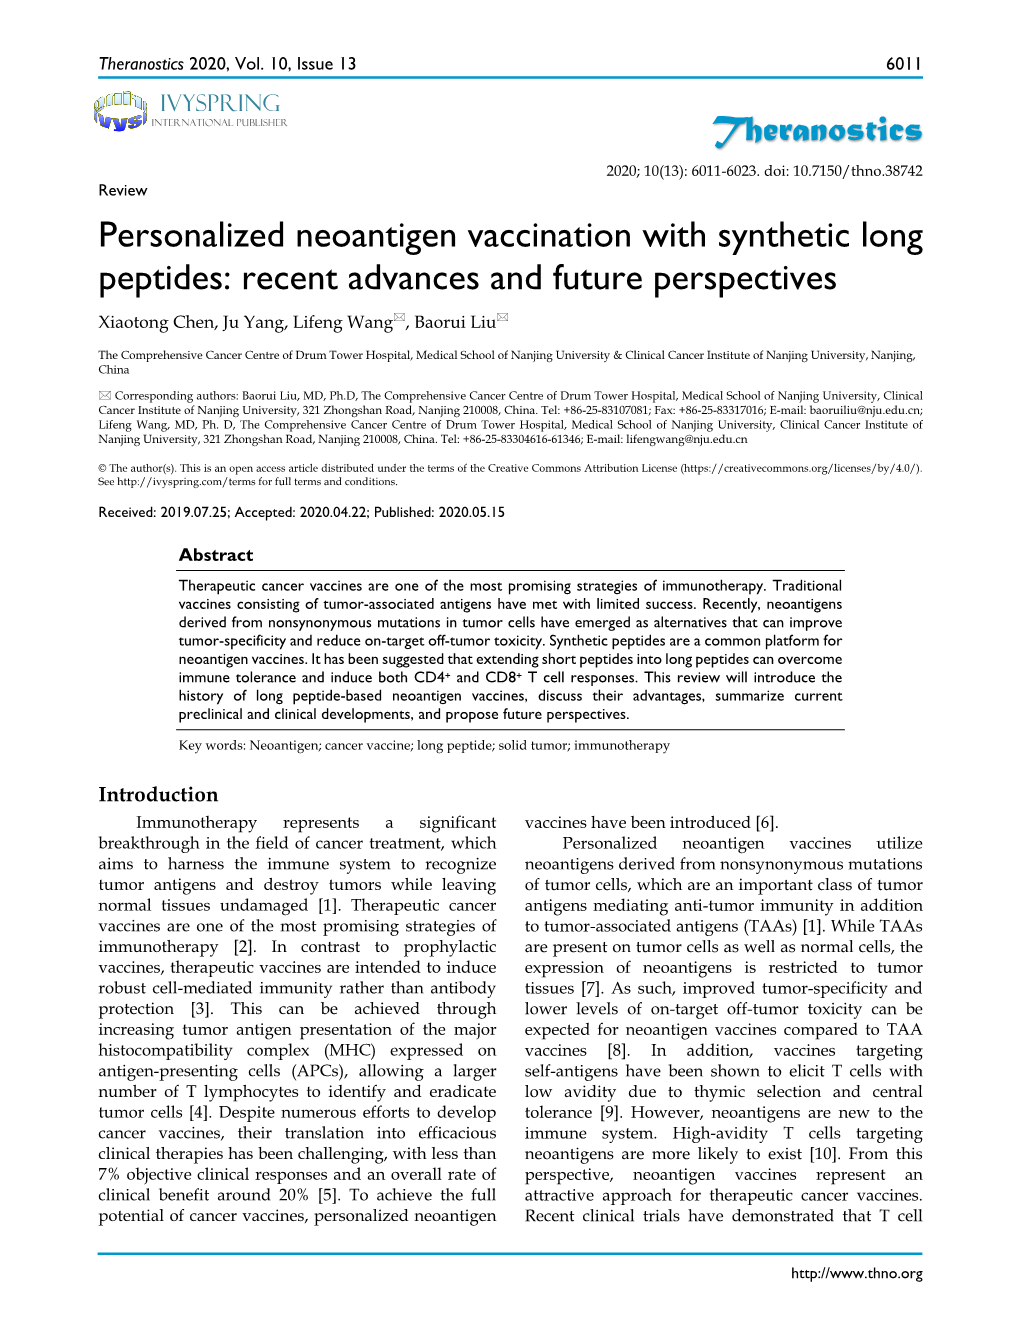 Theranostics Personalized Neoantigen Vaccination With